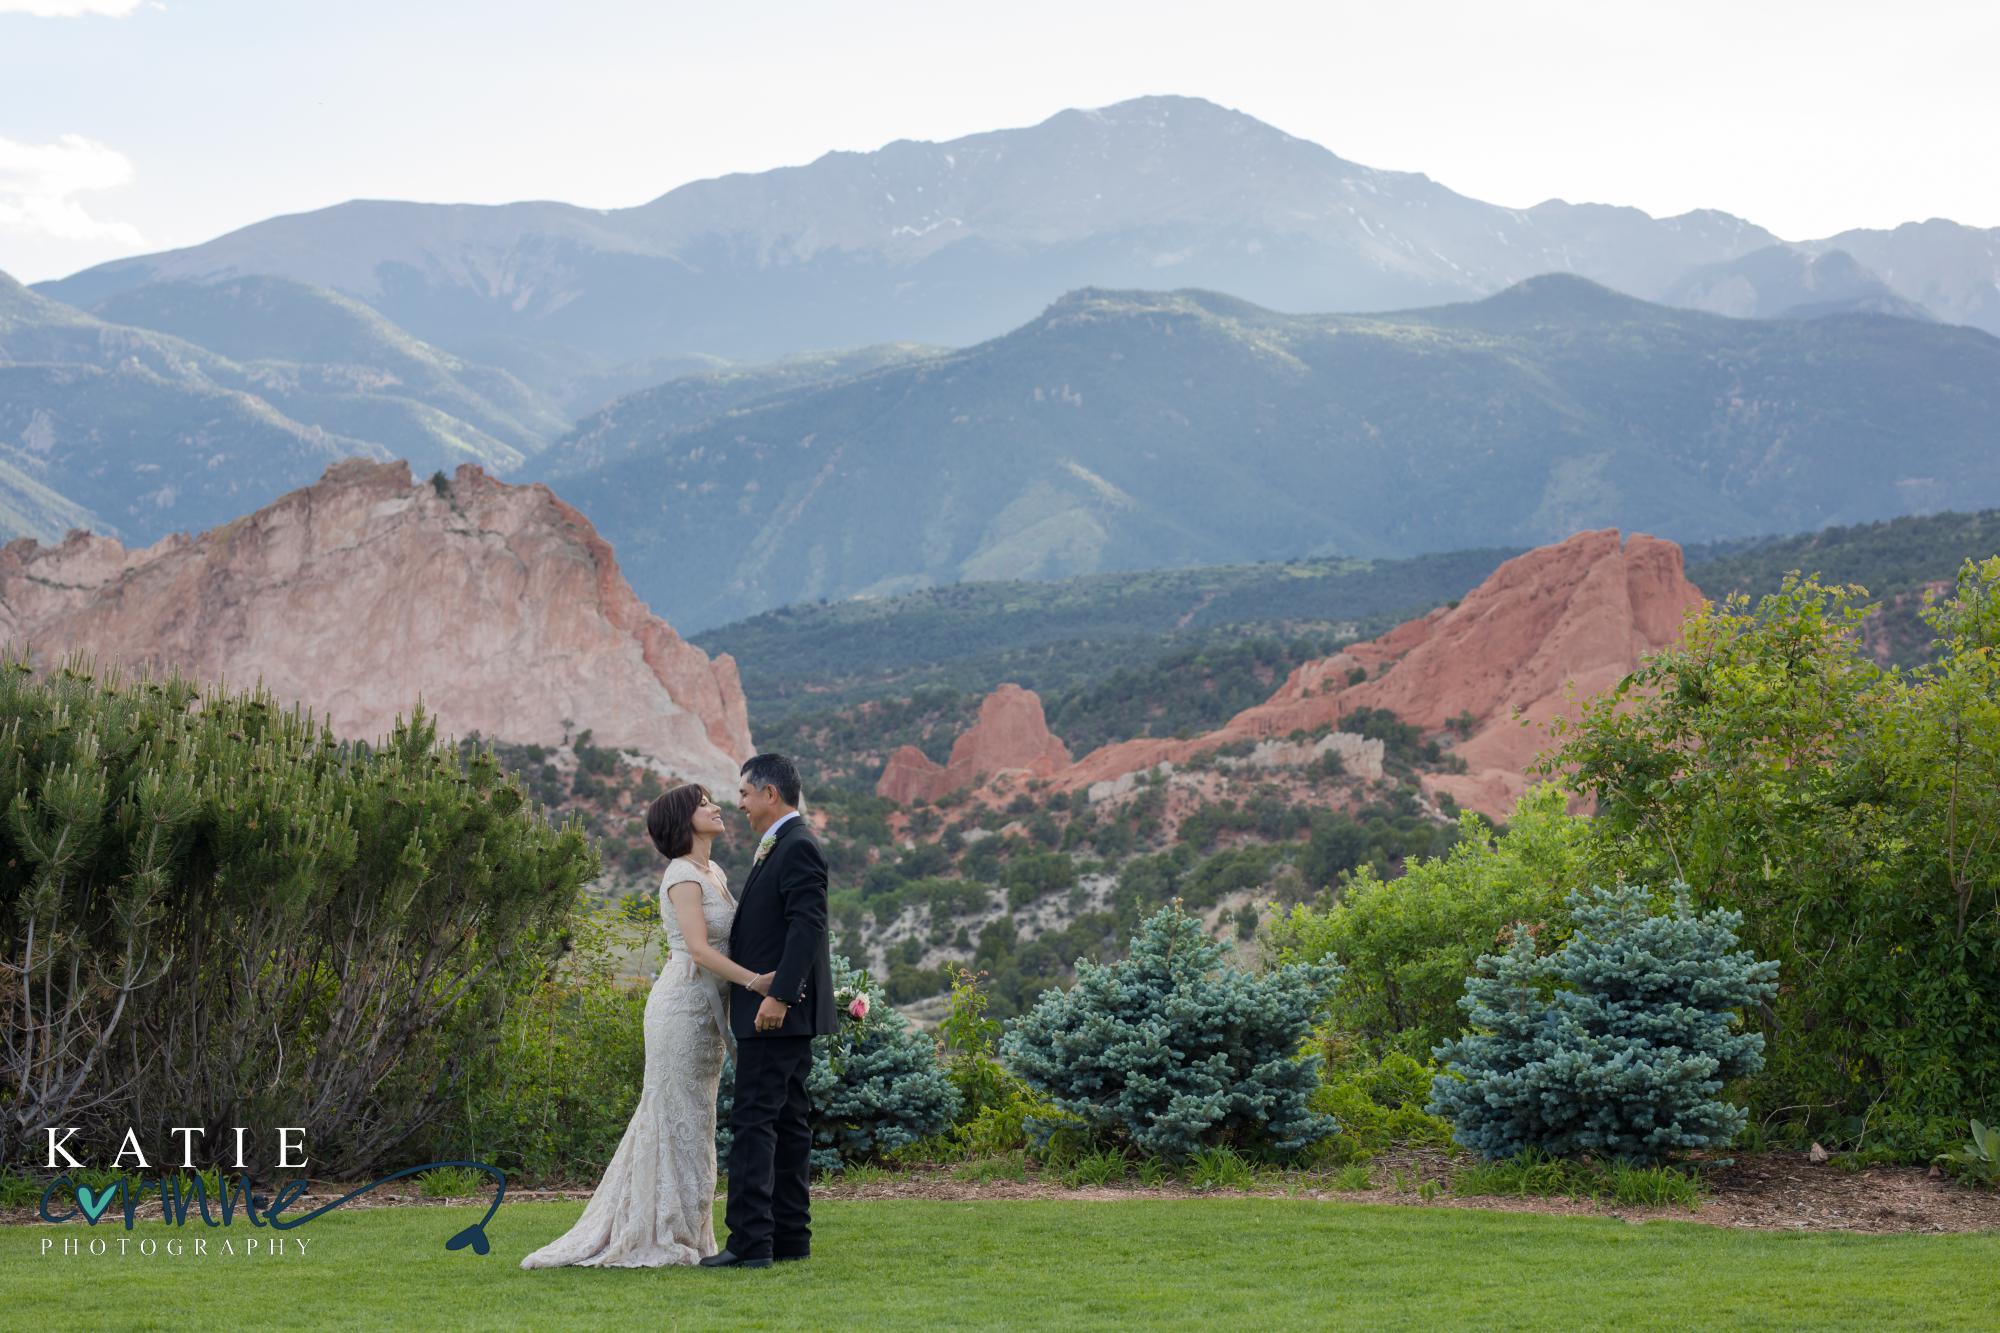 New Mexico couple at destination wedding in Colorado